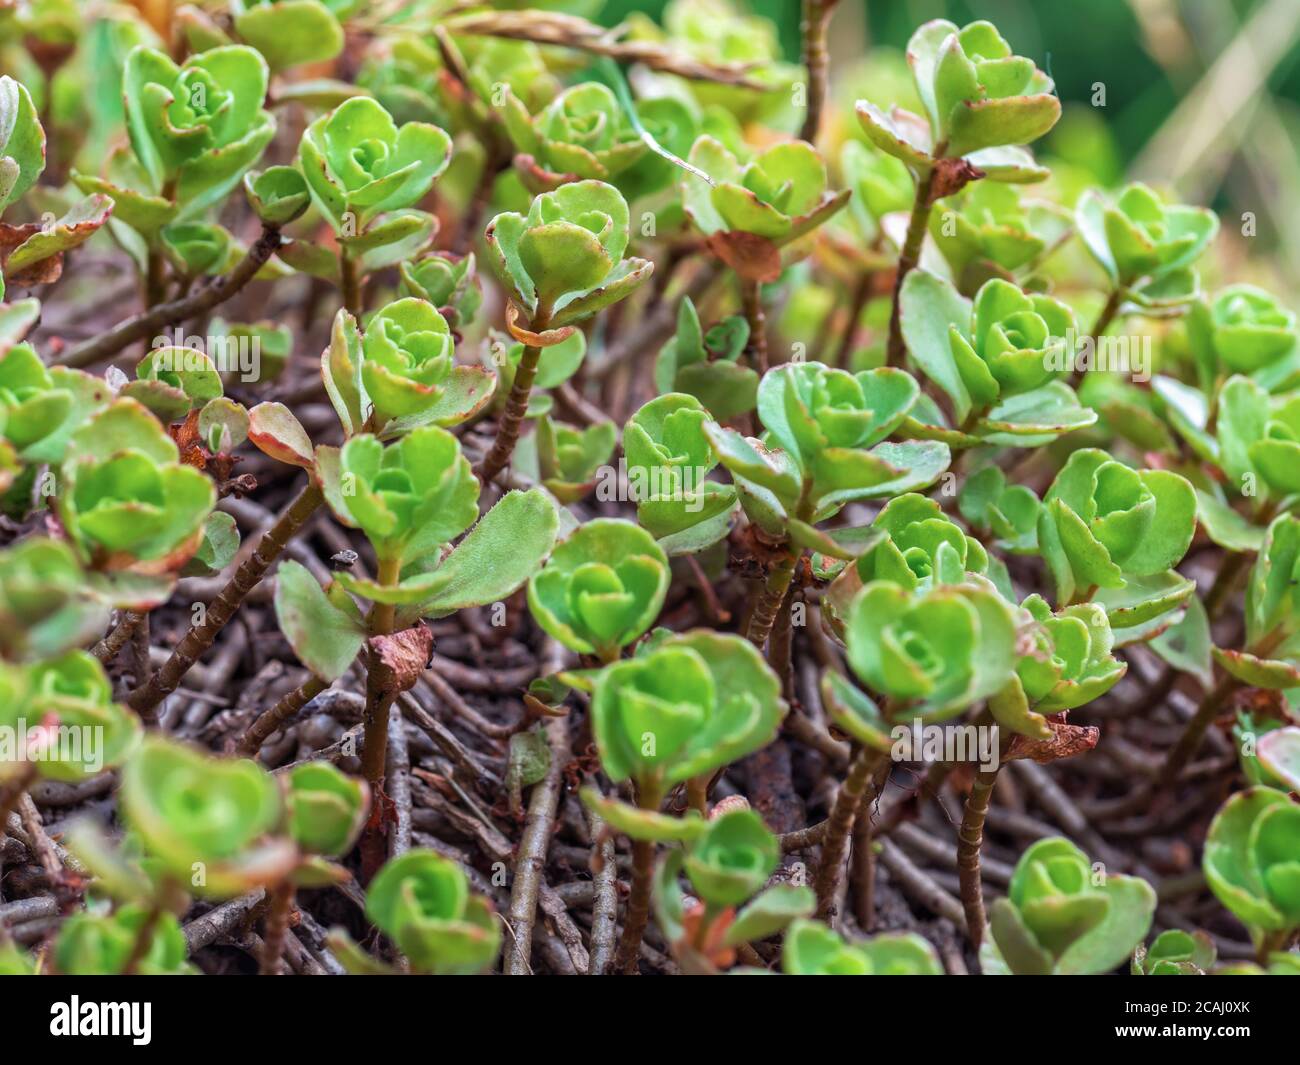 Close-up of Caucasian stonecrop or two-row stonecrop leaves (Sedum spurium). Selective focus, shallow depth of field. Stock Photo